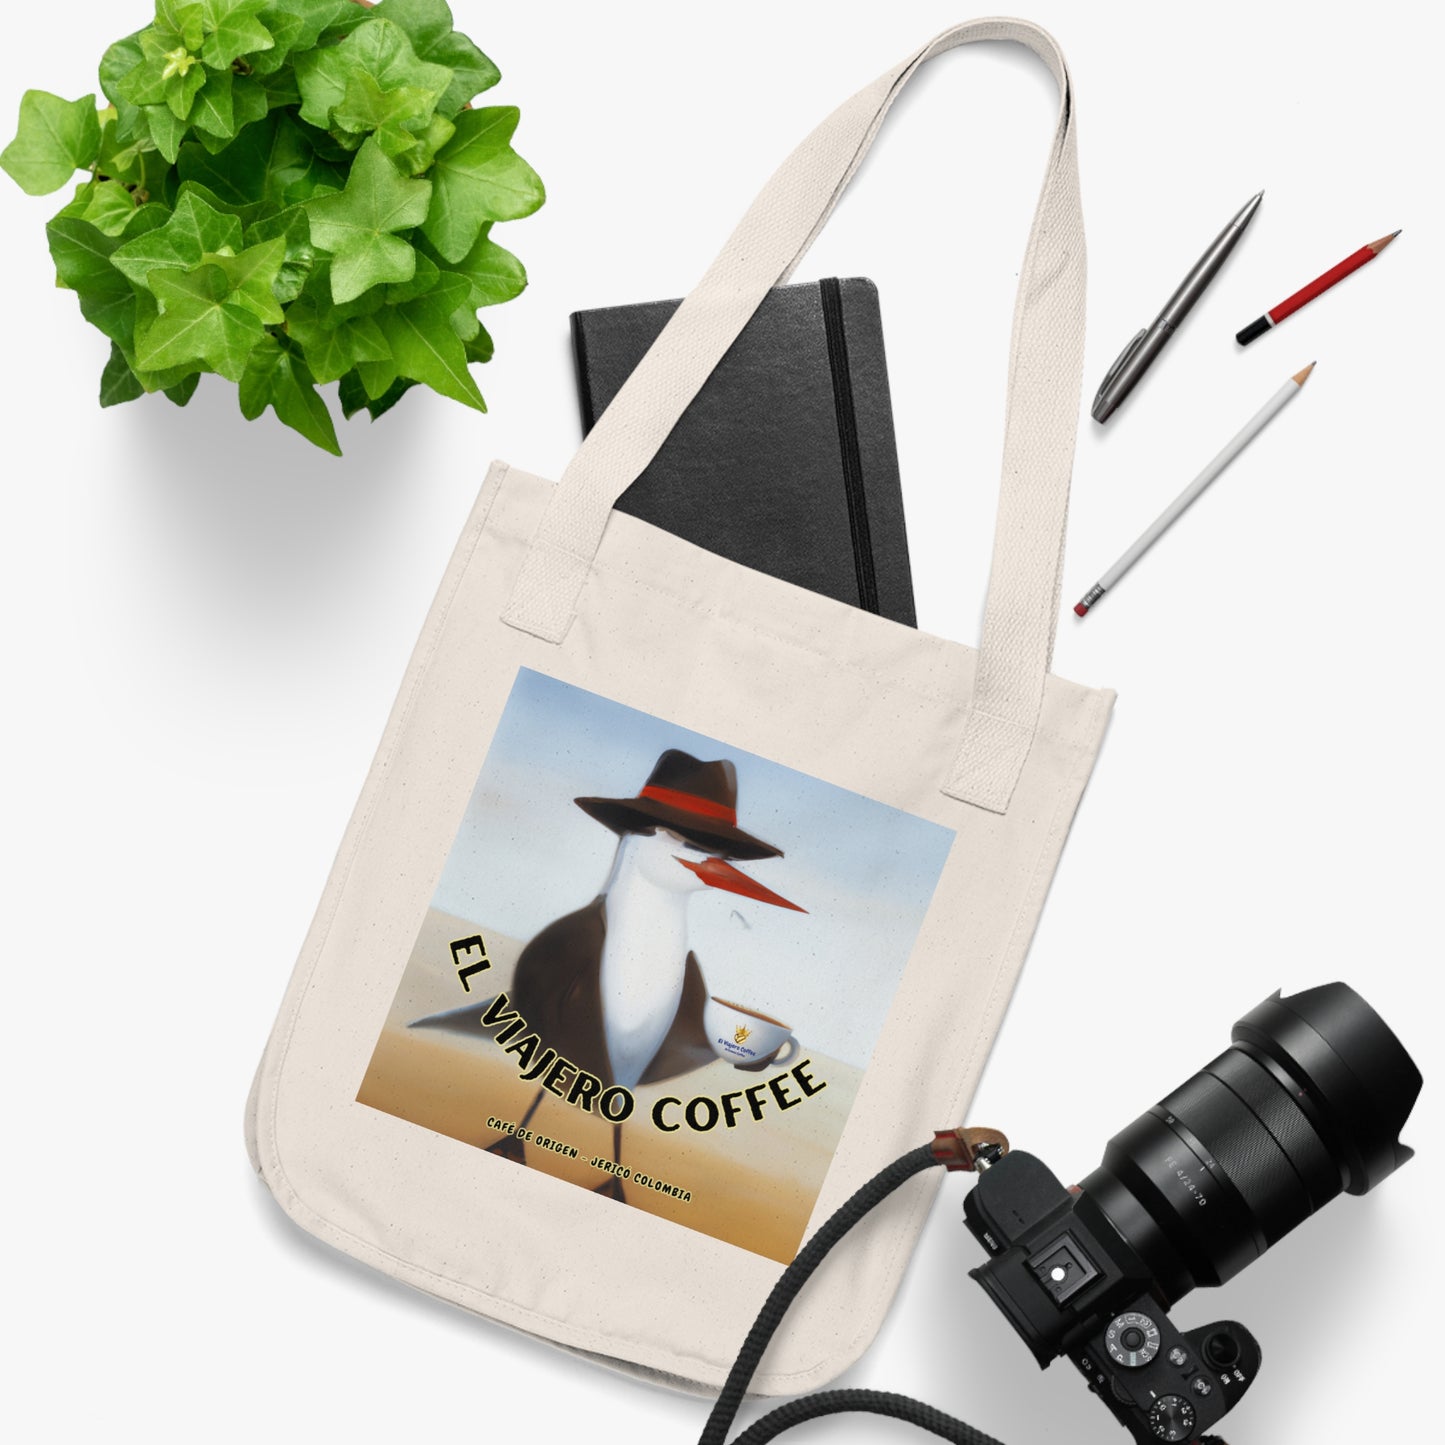 El Viajero Coffee Mascot - Organic Canvas Tote Bag